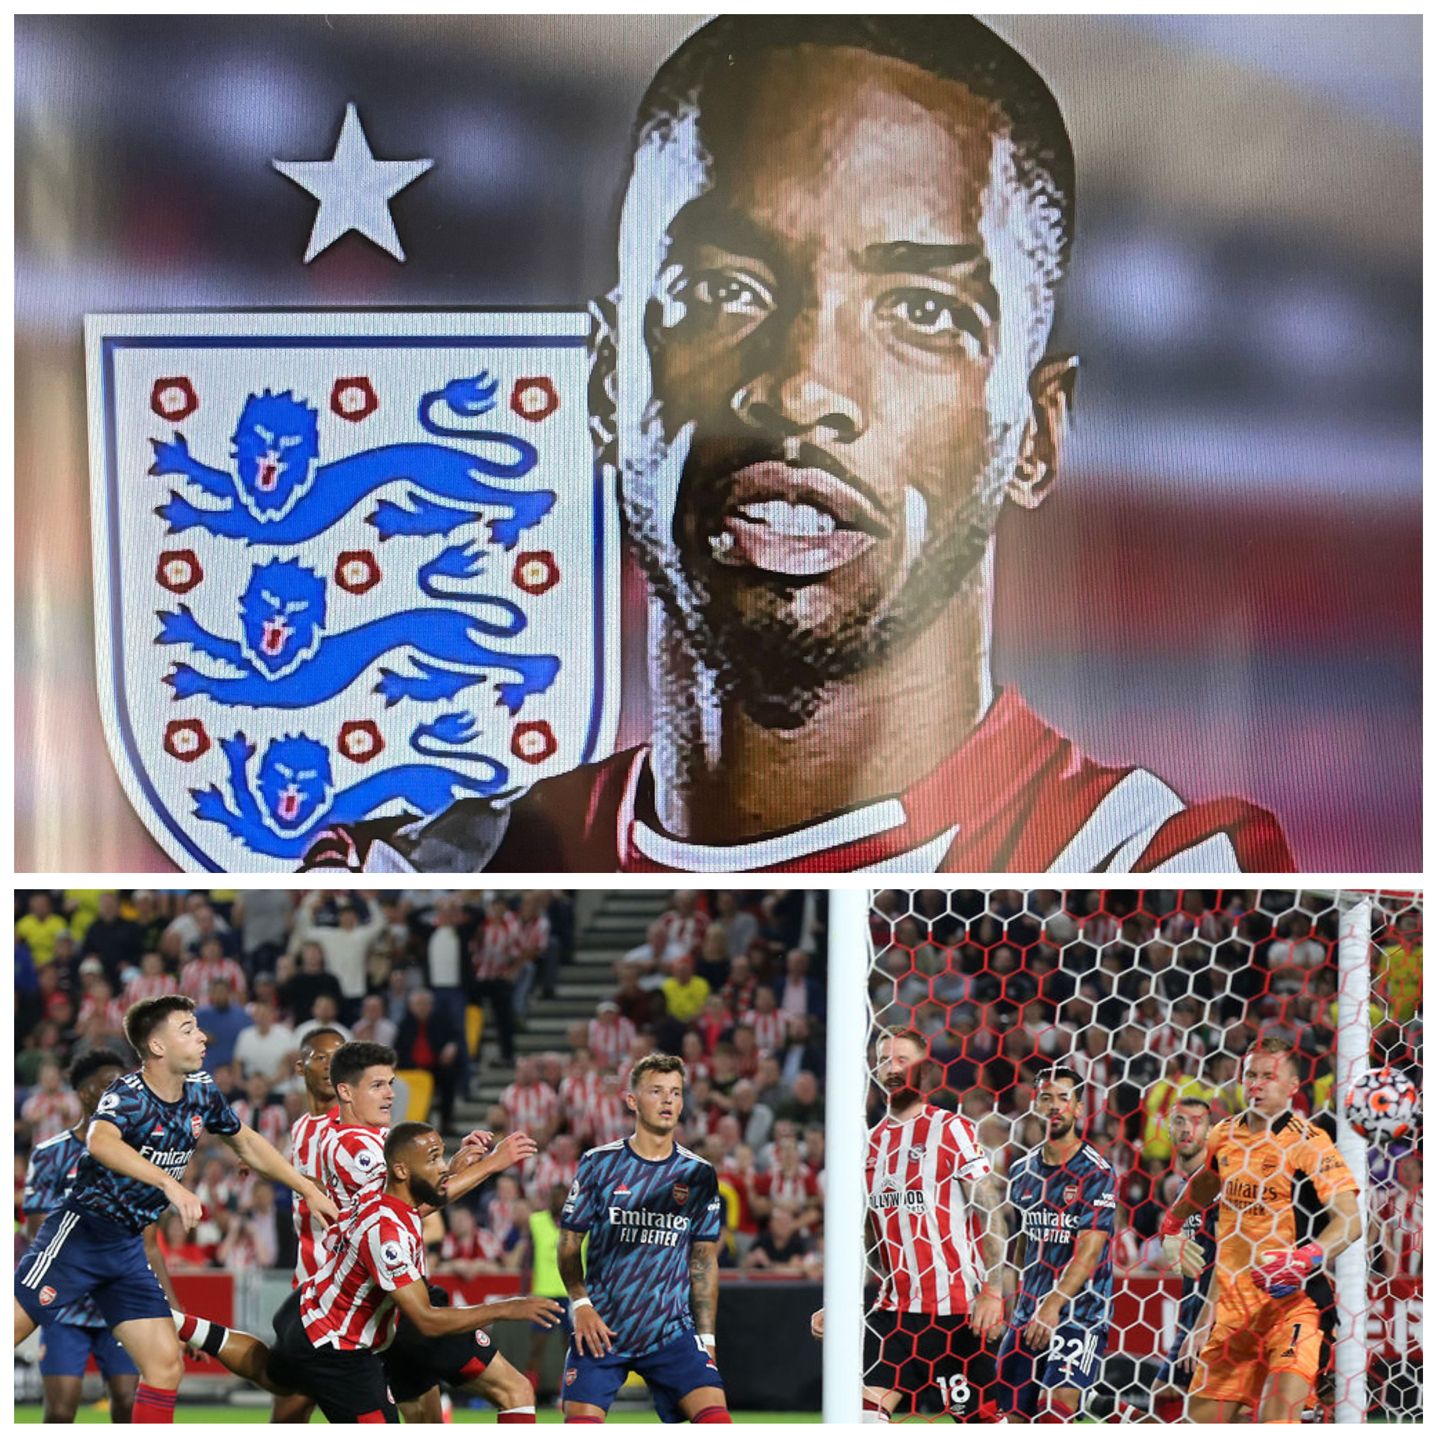 892: Brentford v Arsenal Preview Podcast - England's Ivan Toney, Arteta's Revenge and a Right Royal Send Off